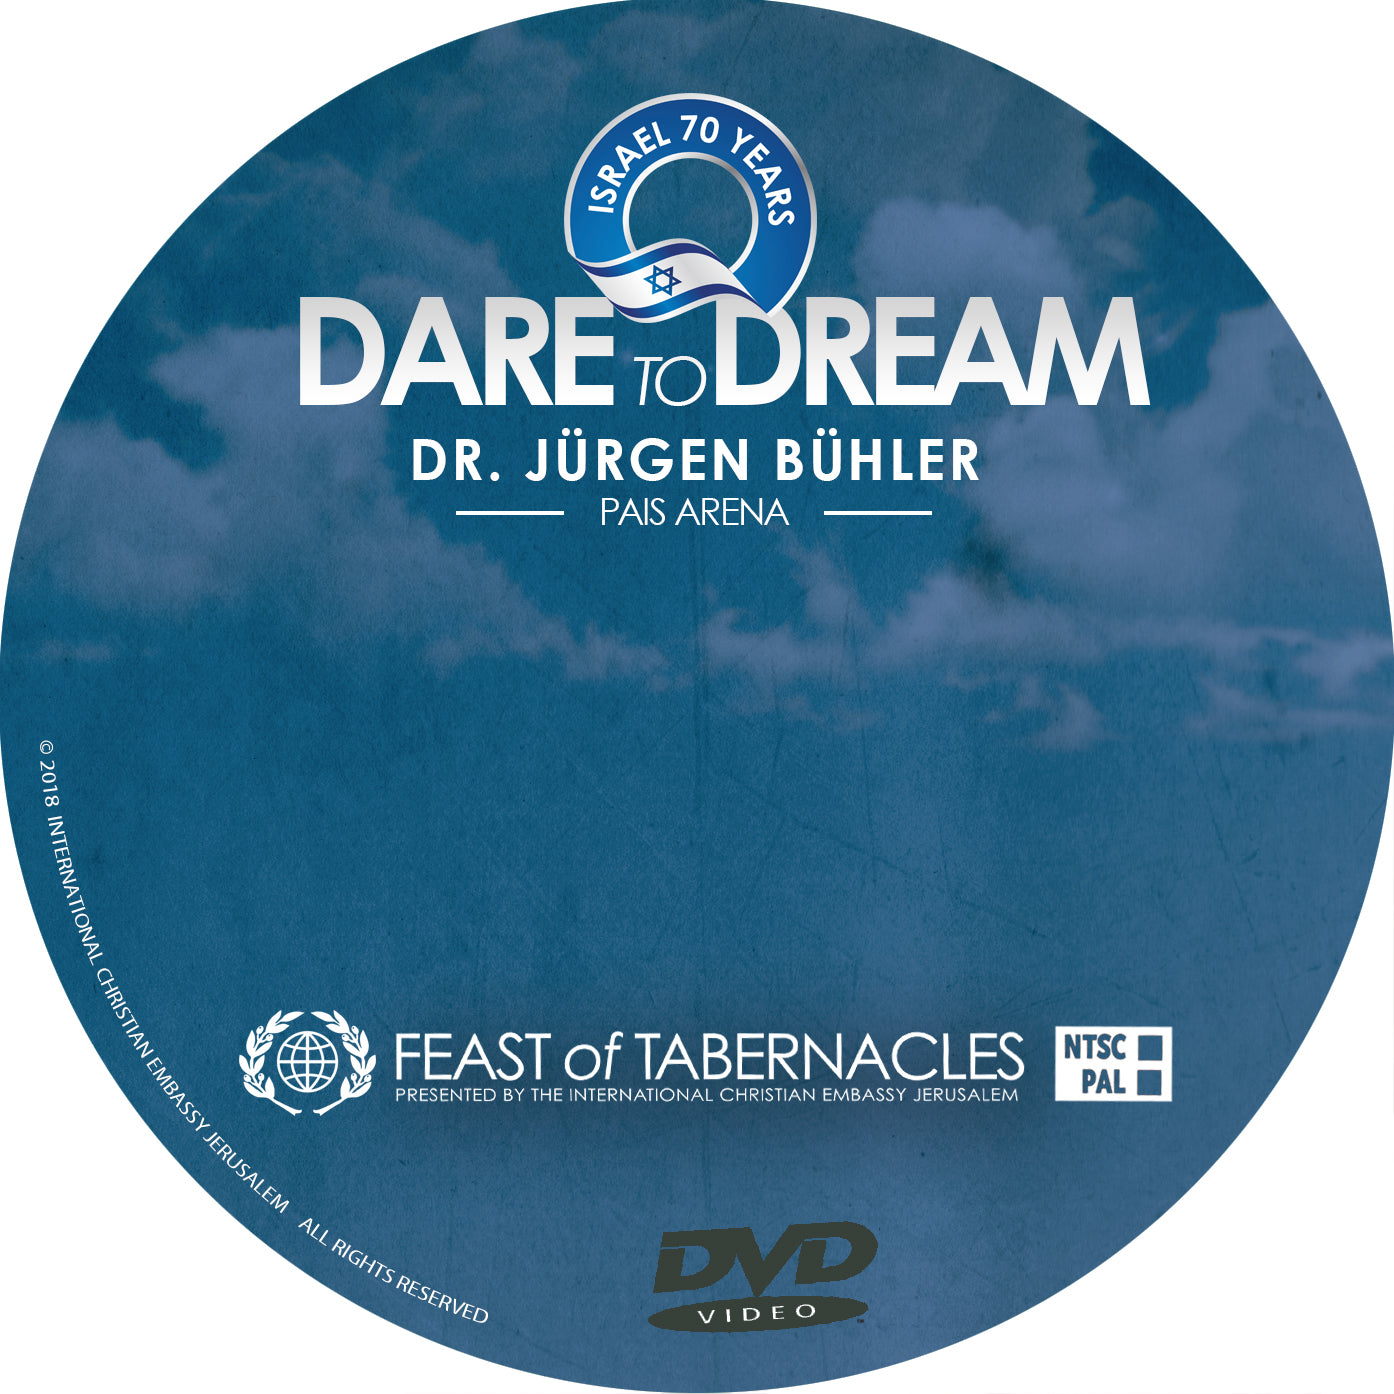 2018 Opening Night, Dare to Dream, Jurgen Buhler , - DVD